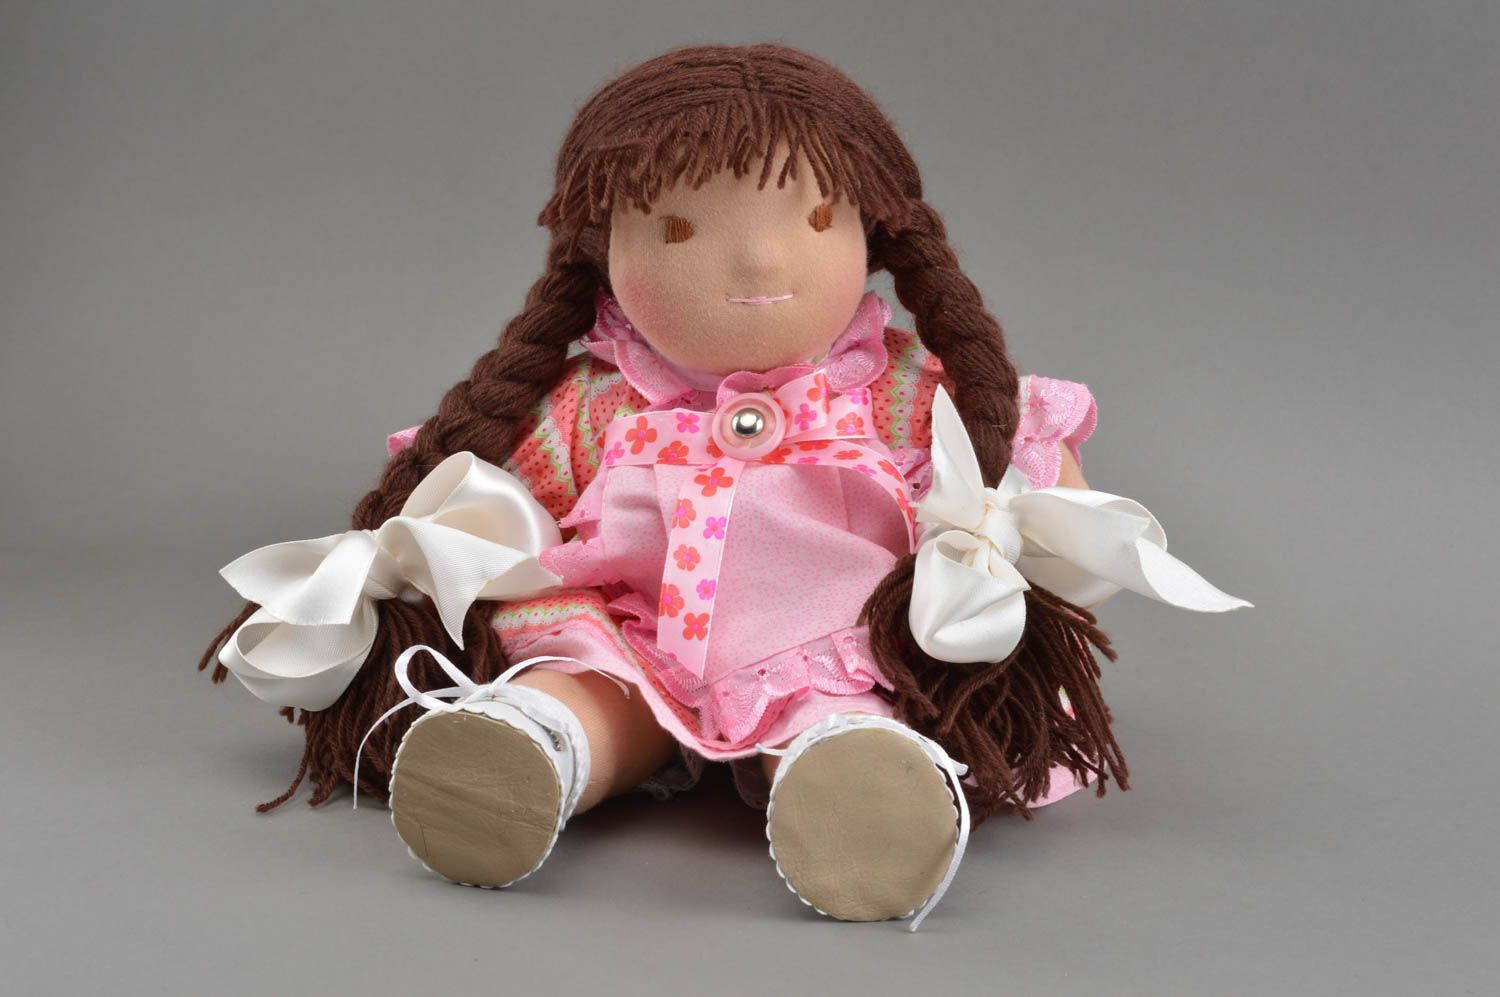 Muñeca artesanal hecha a mano de tela regalos para niñas decoración de hogar foto 3